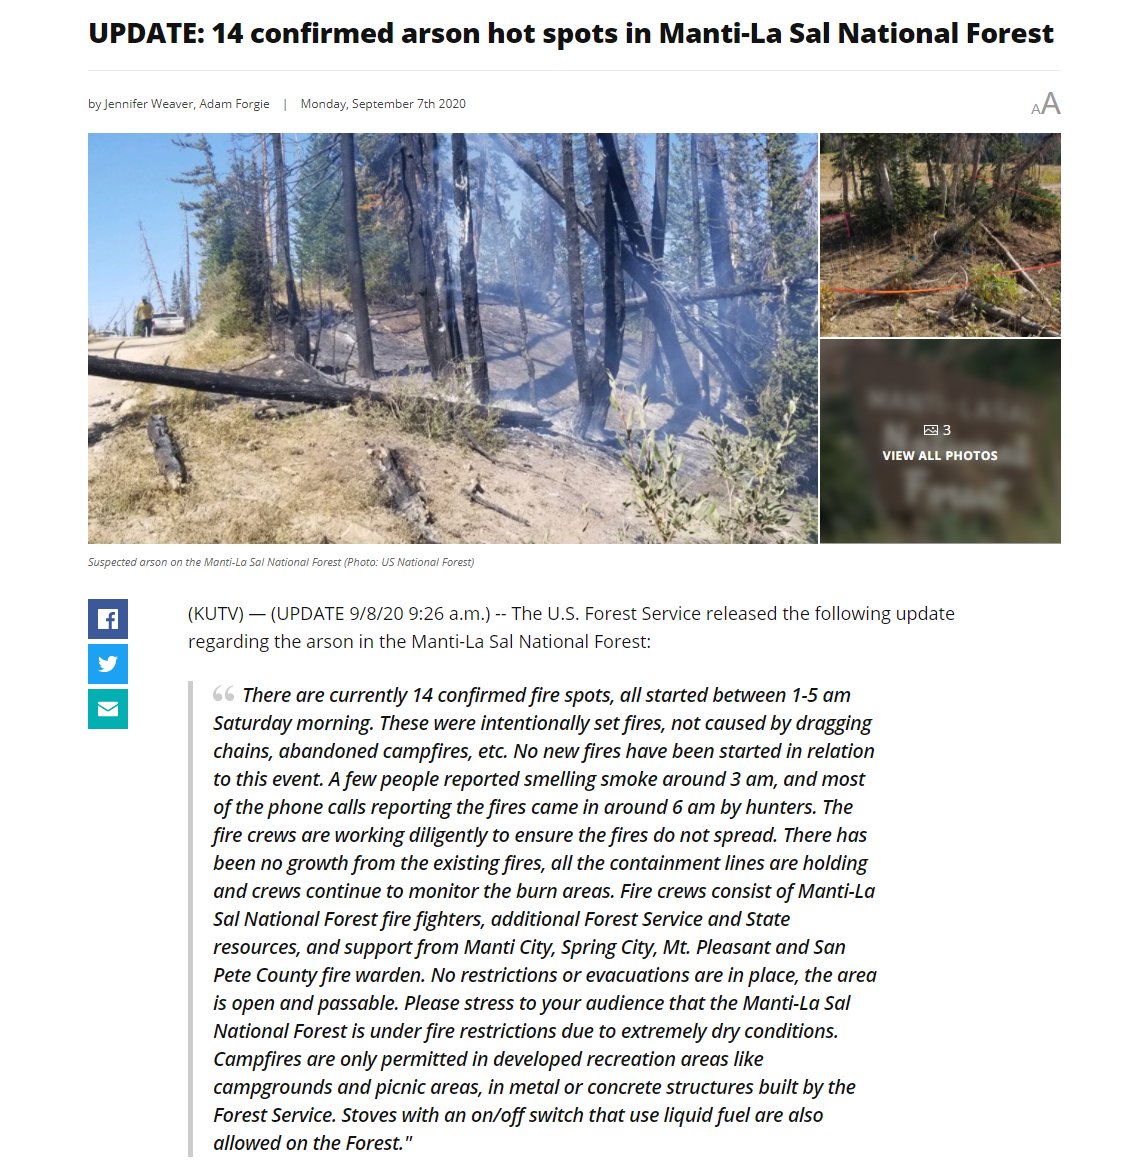 113) Sauce. https://kutv.com/news/local/suspected-arson-on-the-manti-la-sal-national-forest